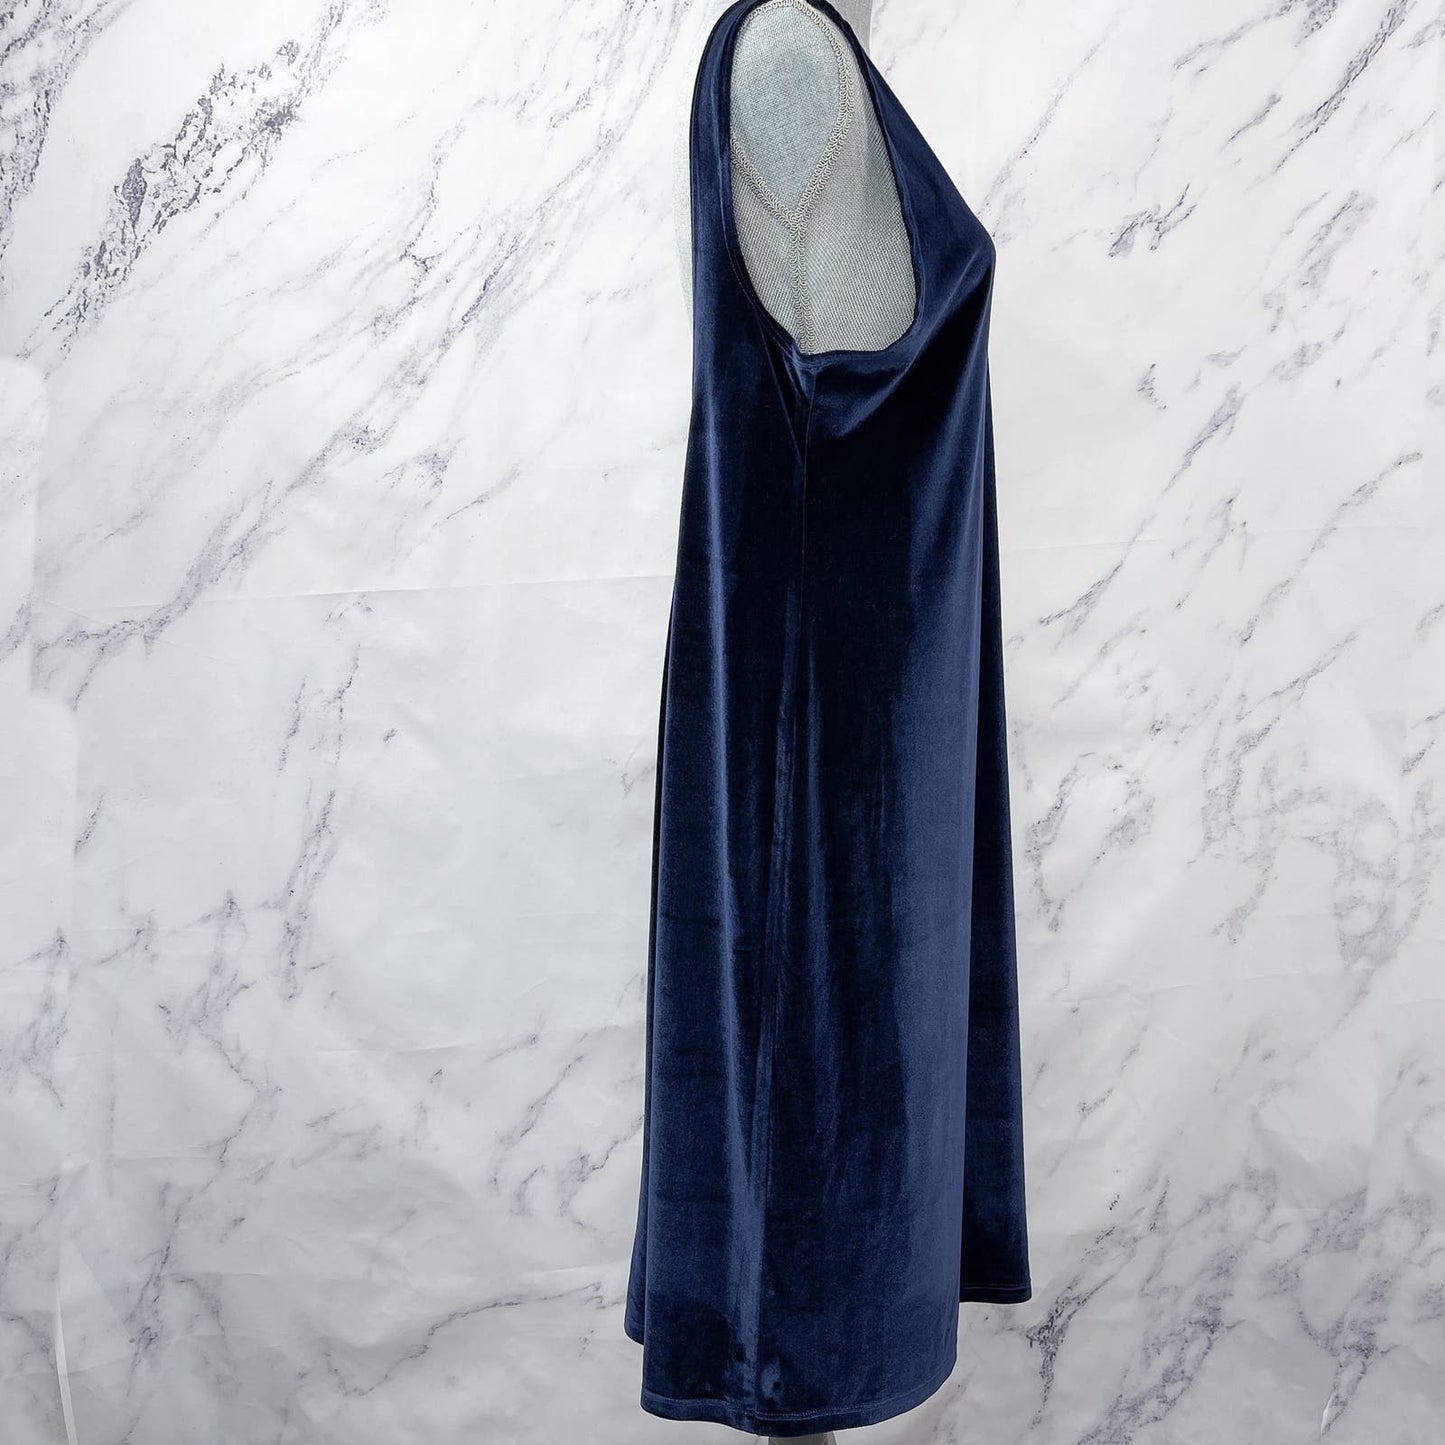 Reformation | Navy Blue Velour Dress | XL